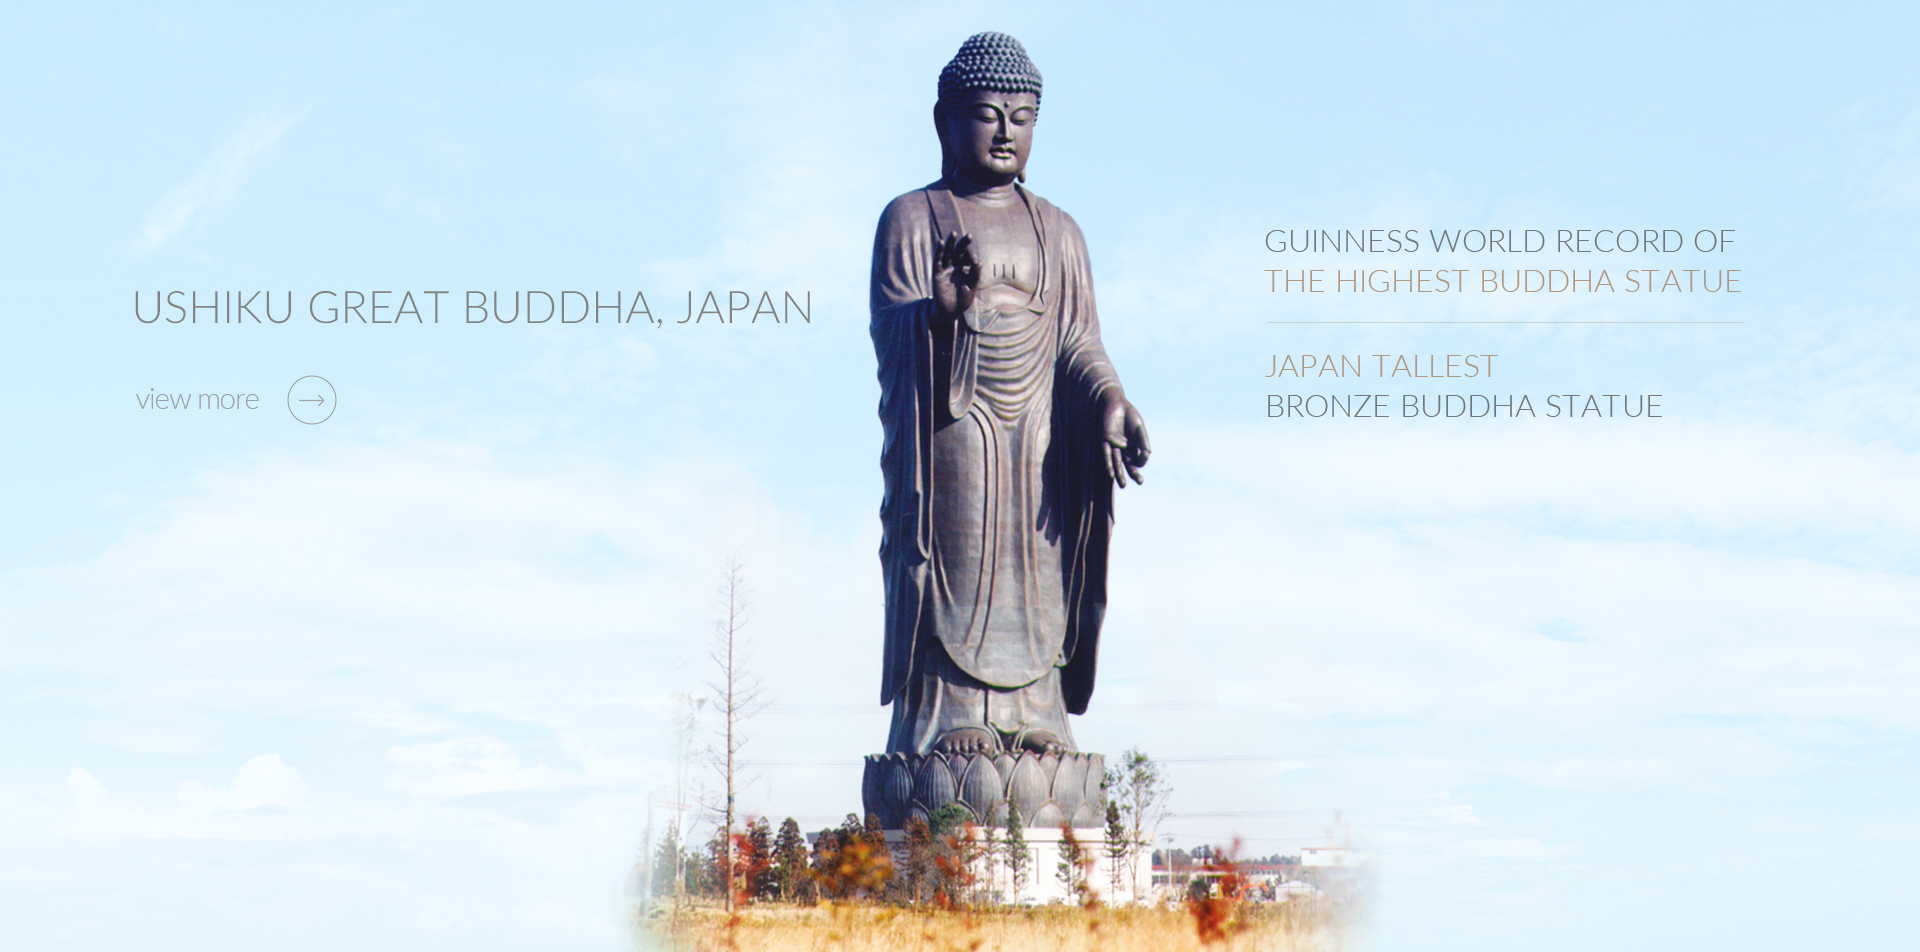 Ushiku Great Buddha, Japan